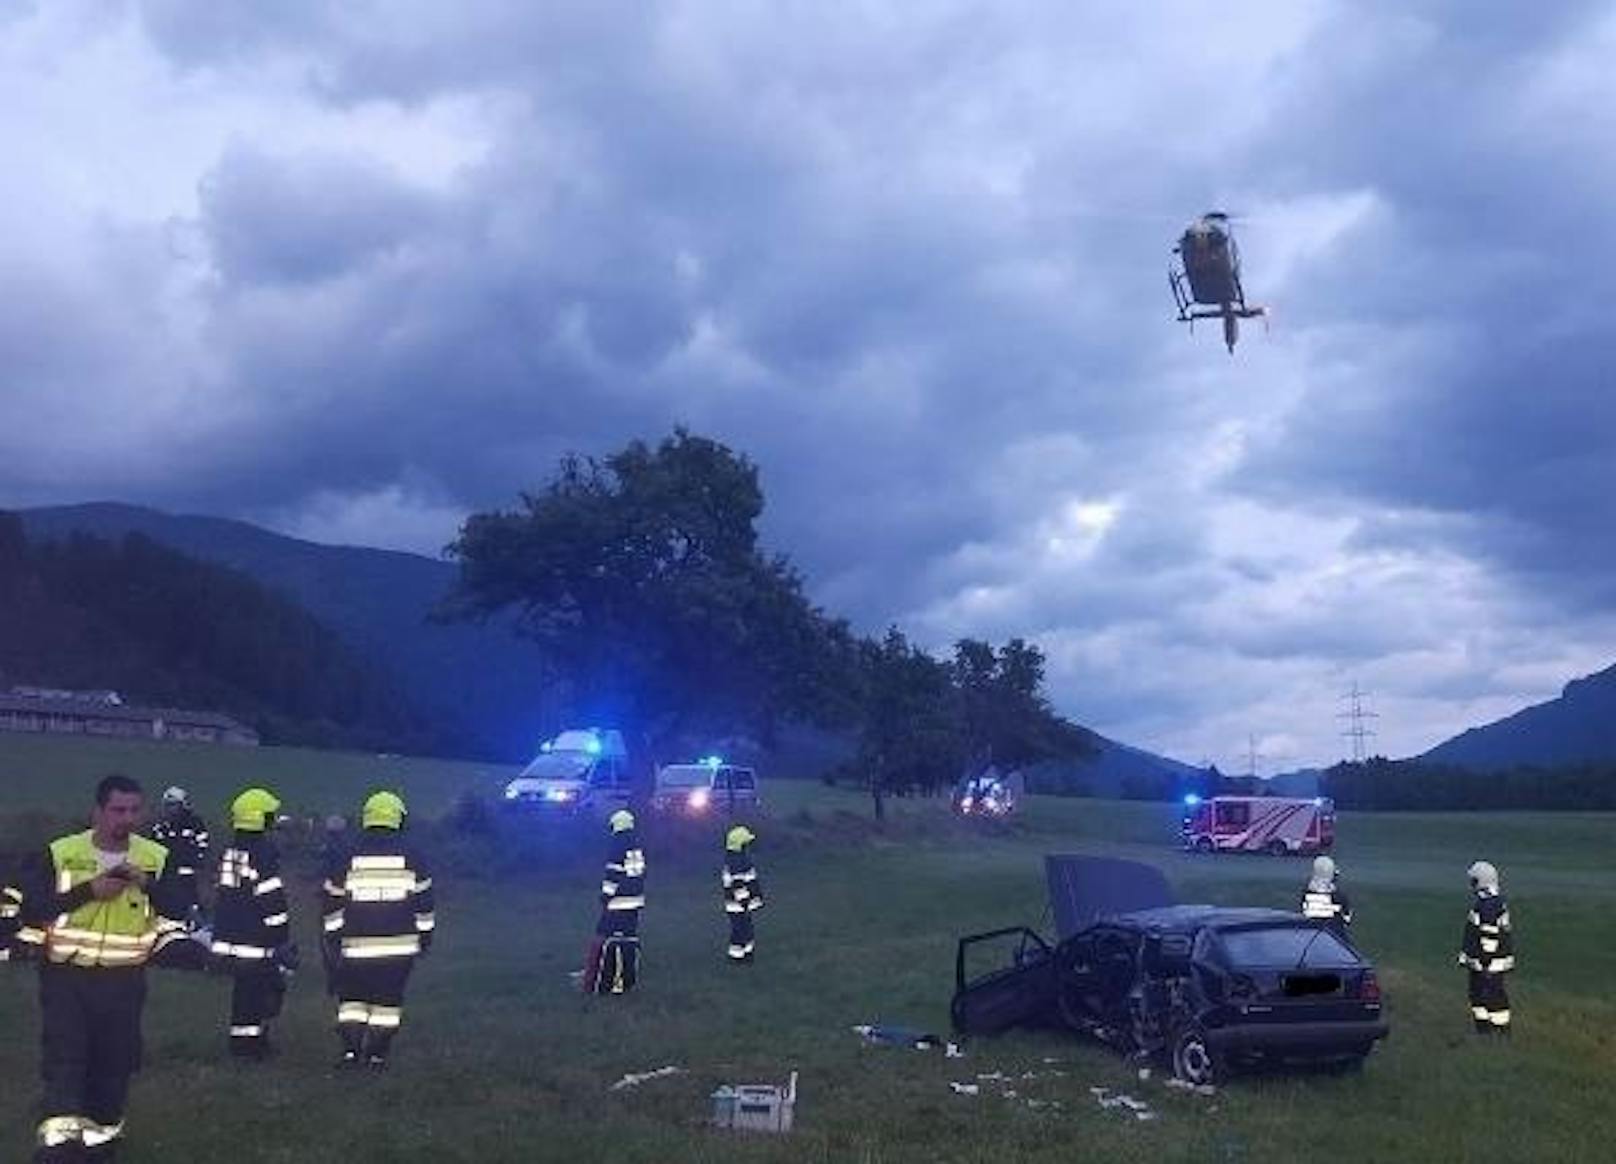 Ein schwerer Verkehrsunfall erschüttert den Bezirk Liezen: Ein 16-Jähriger schwebt nach dem Crash in Lebensgefahr.